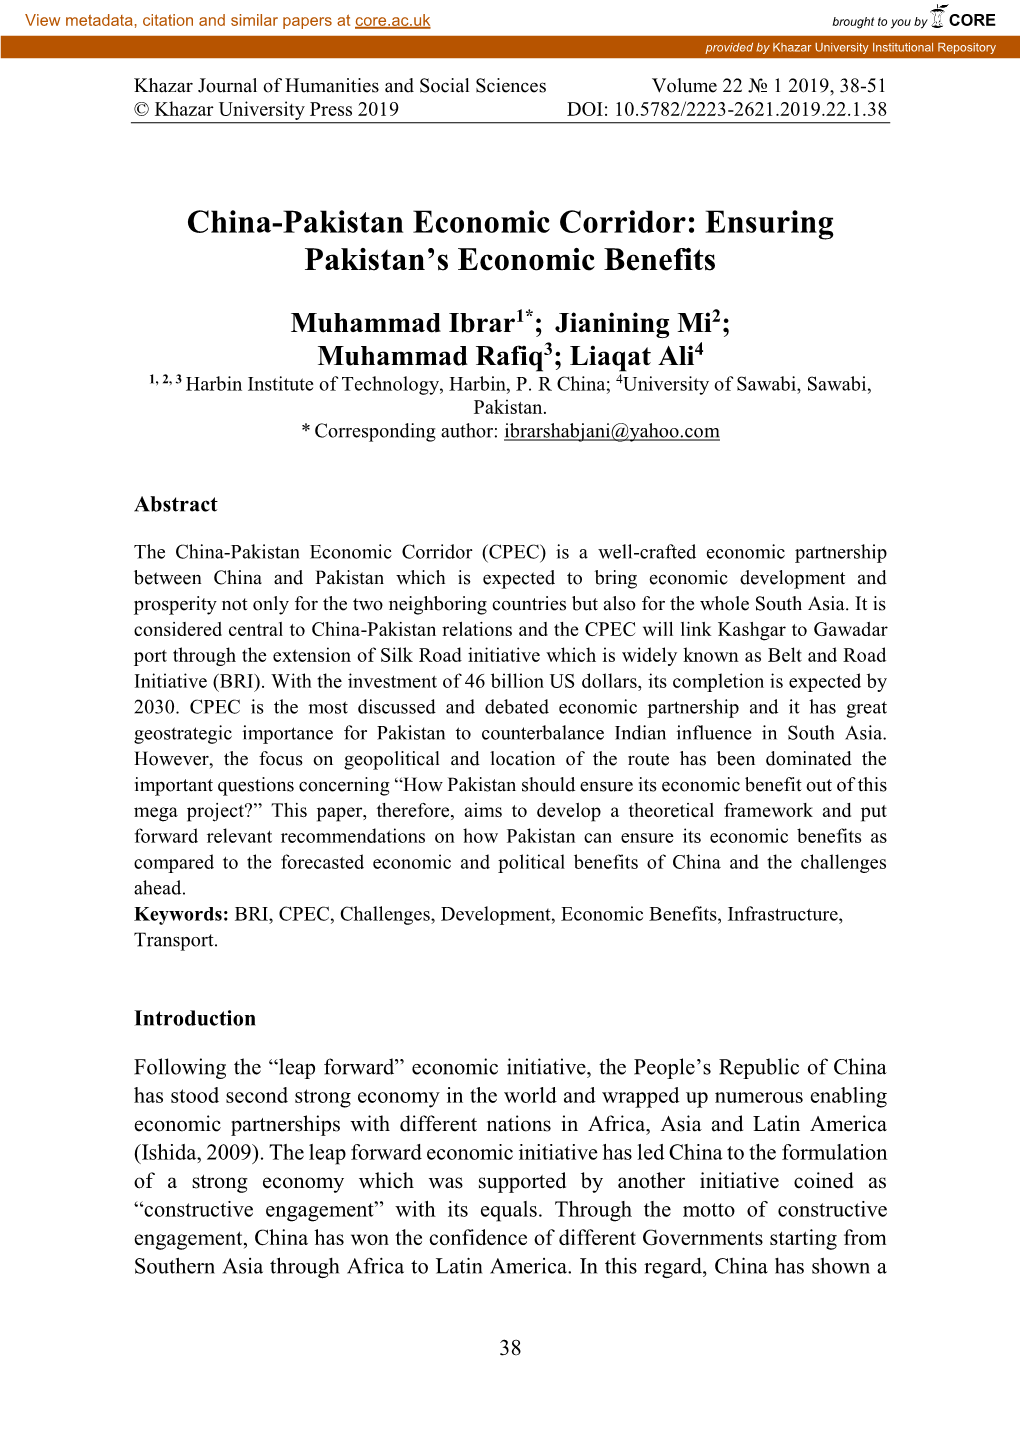 China-Pakistan Economic Corridor: Ensuring Pakistan’S Economic Benefits